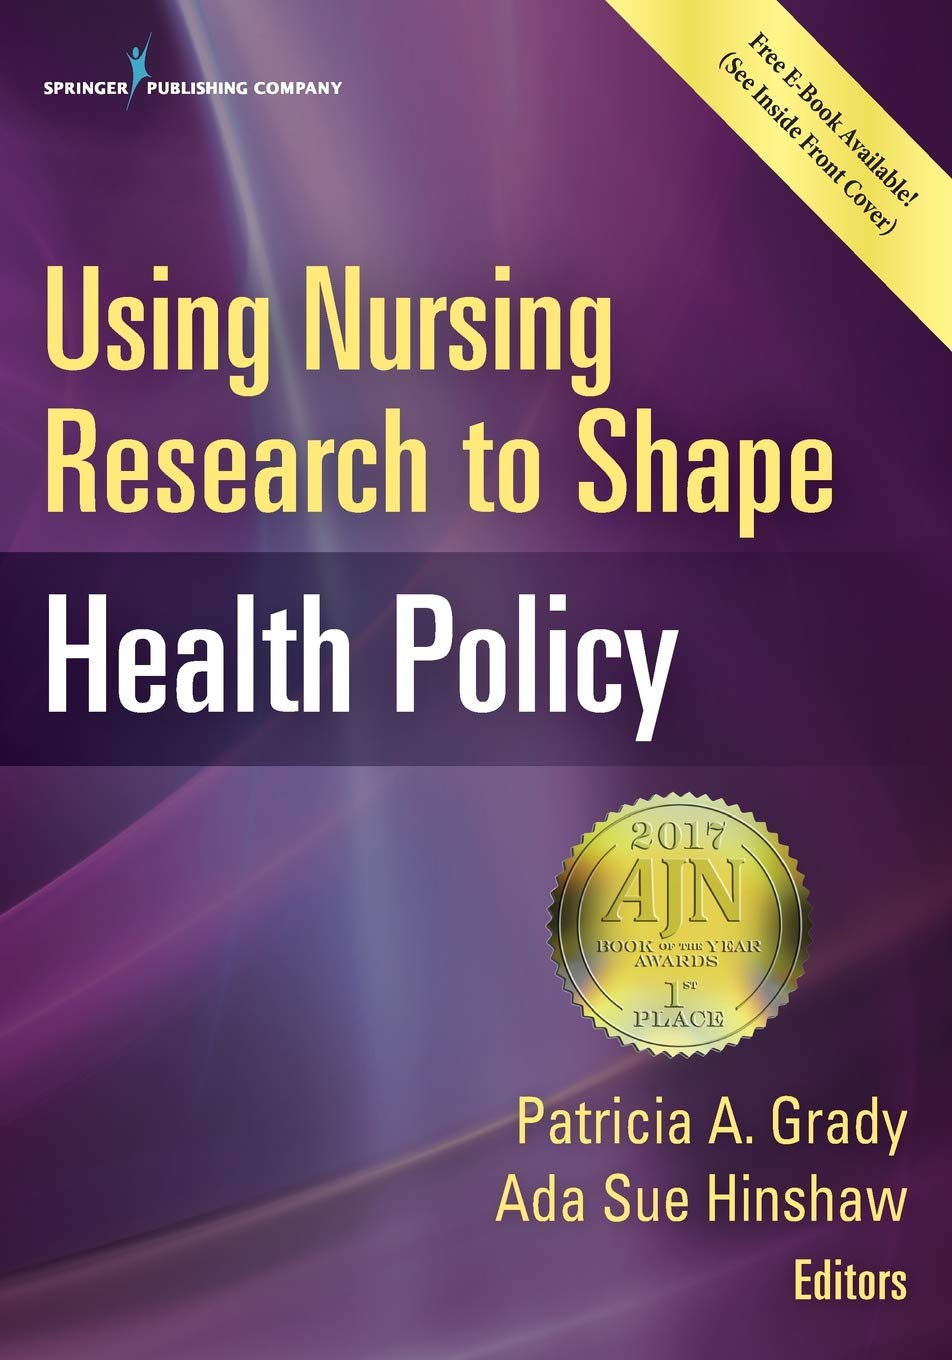 Shaping Health Policy Through Nursing